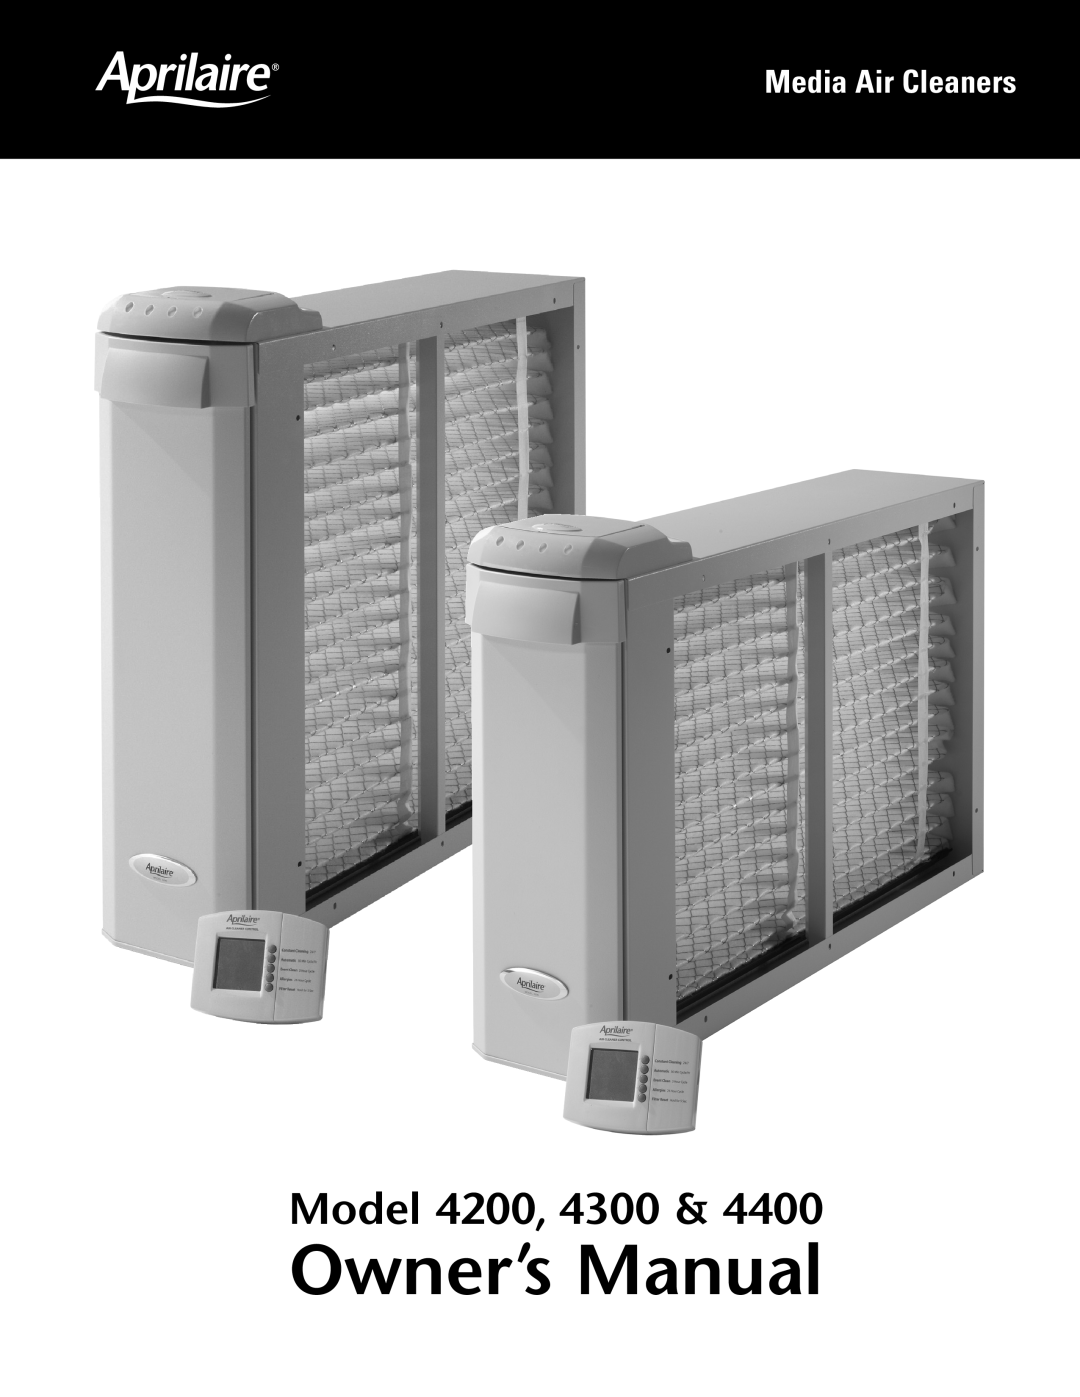 Aprilaire 4300 owner manual Model, Media Air Cleaners 